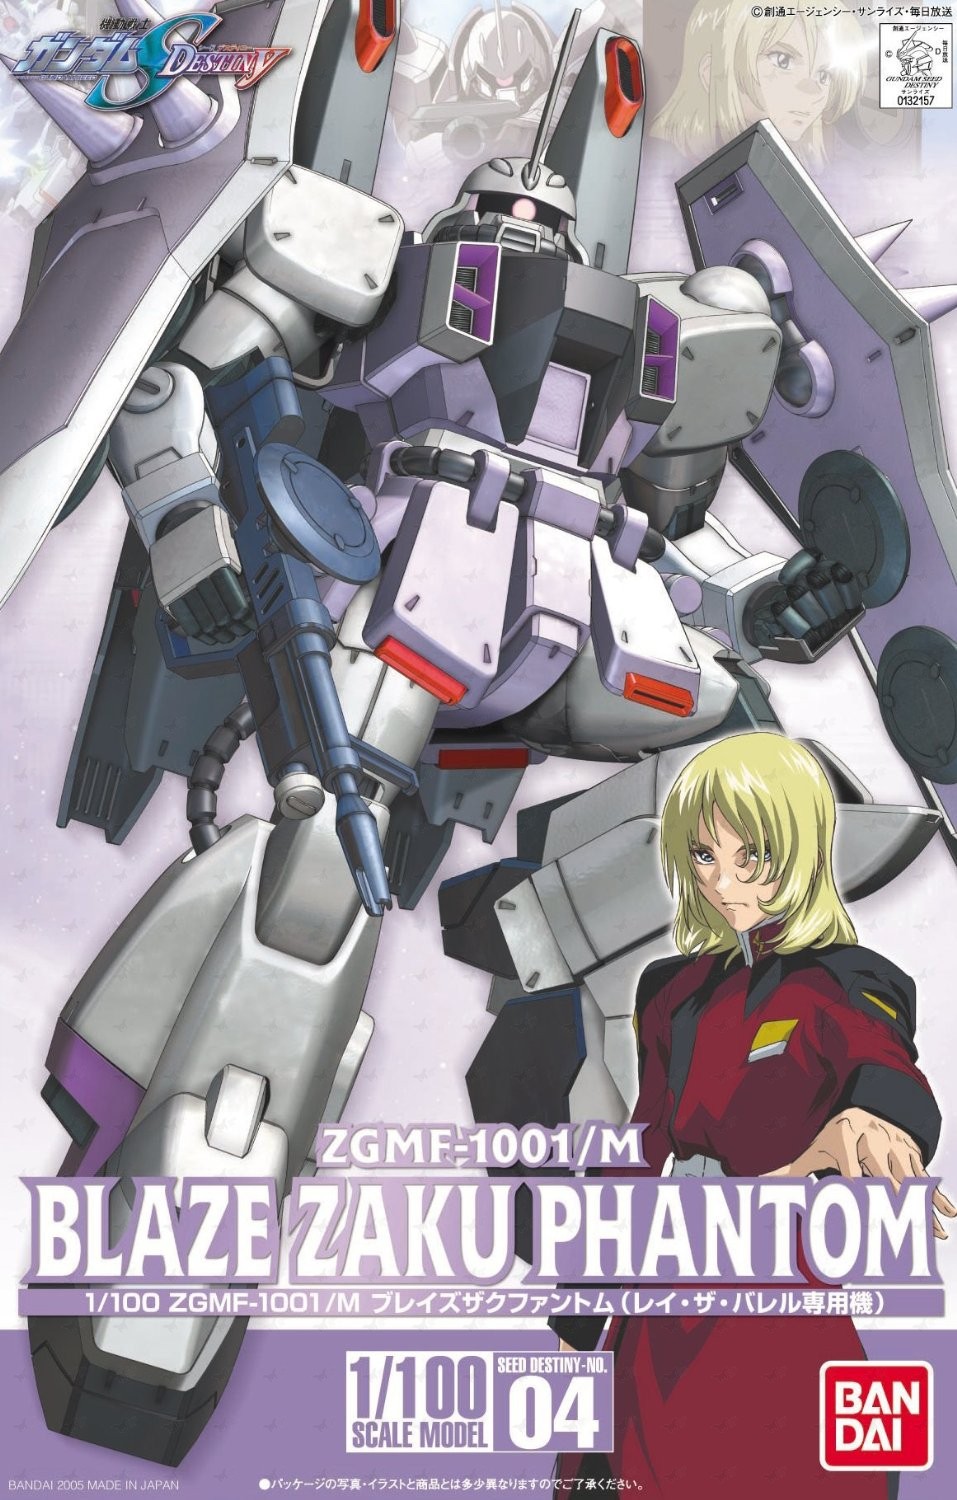 1/100 ZGMF-1001/M Blaze ZAKU Phantom (Rey Za Burrel Custom 